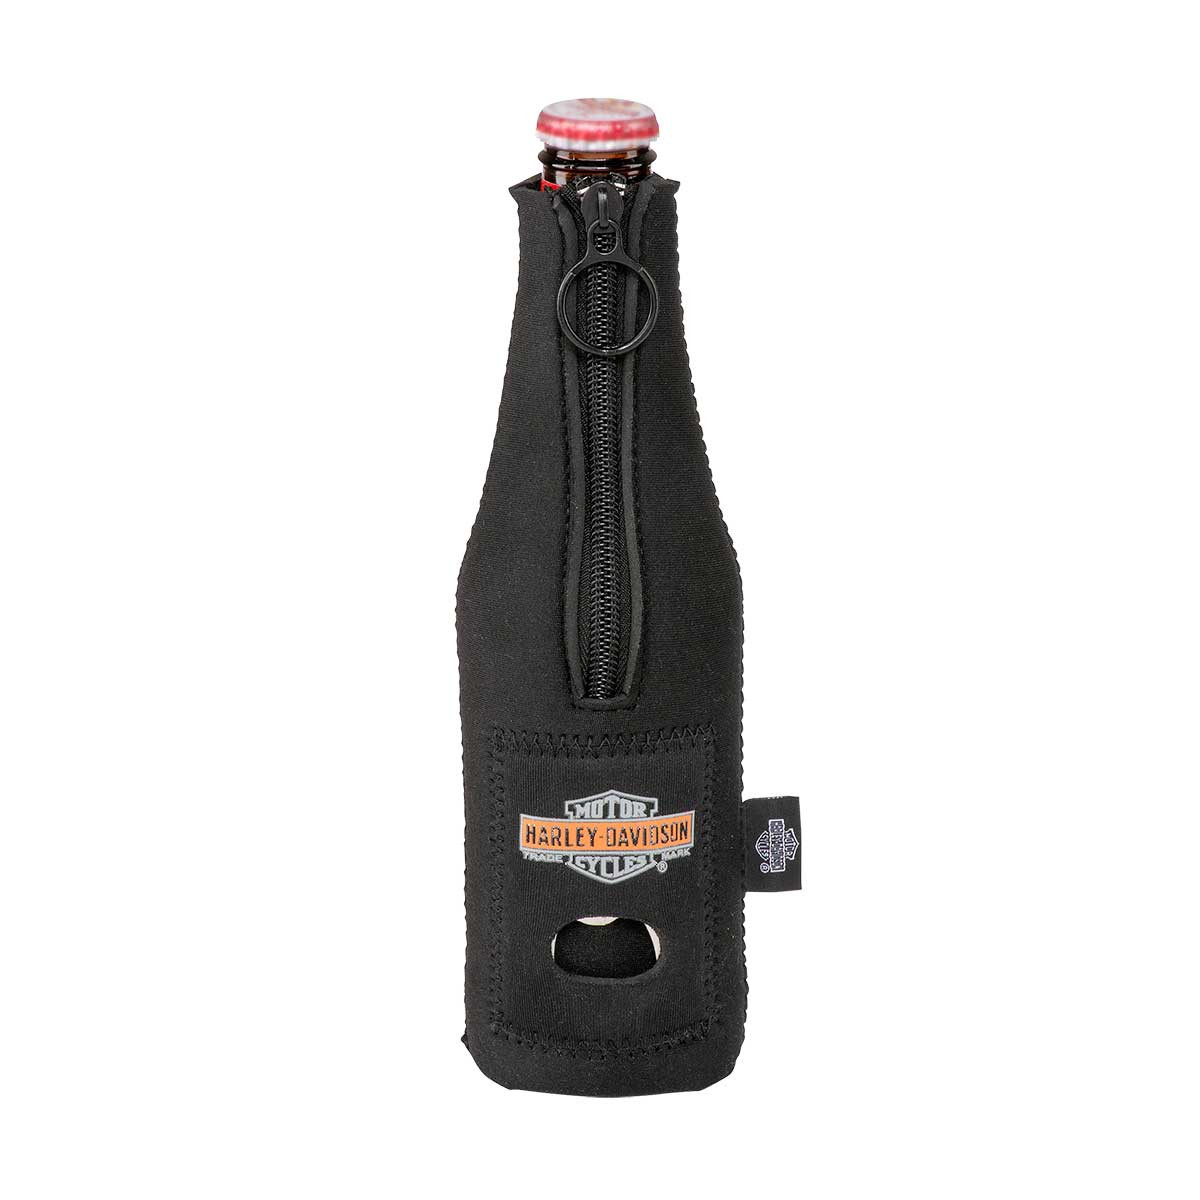 Harley-Davidson bottle zip